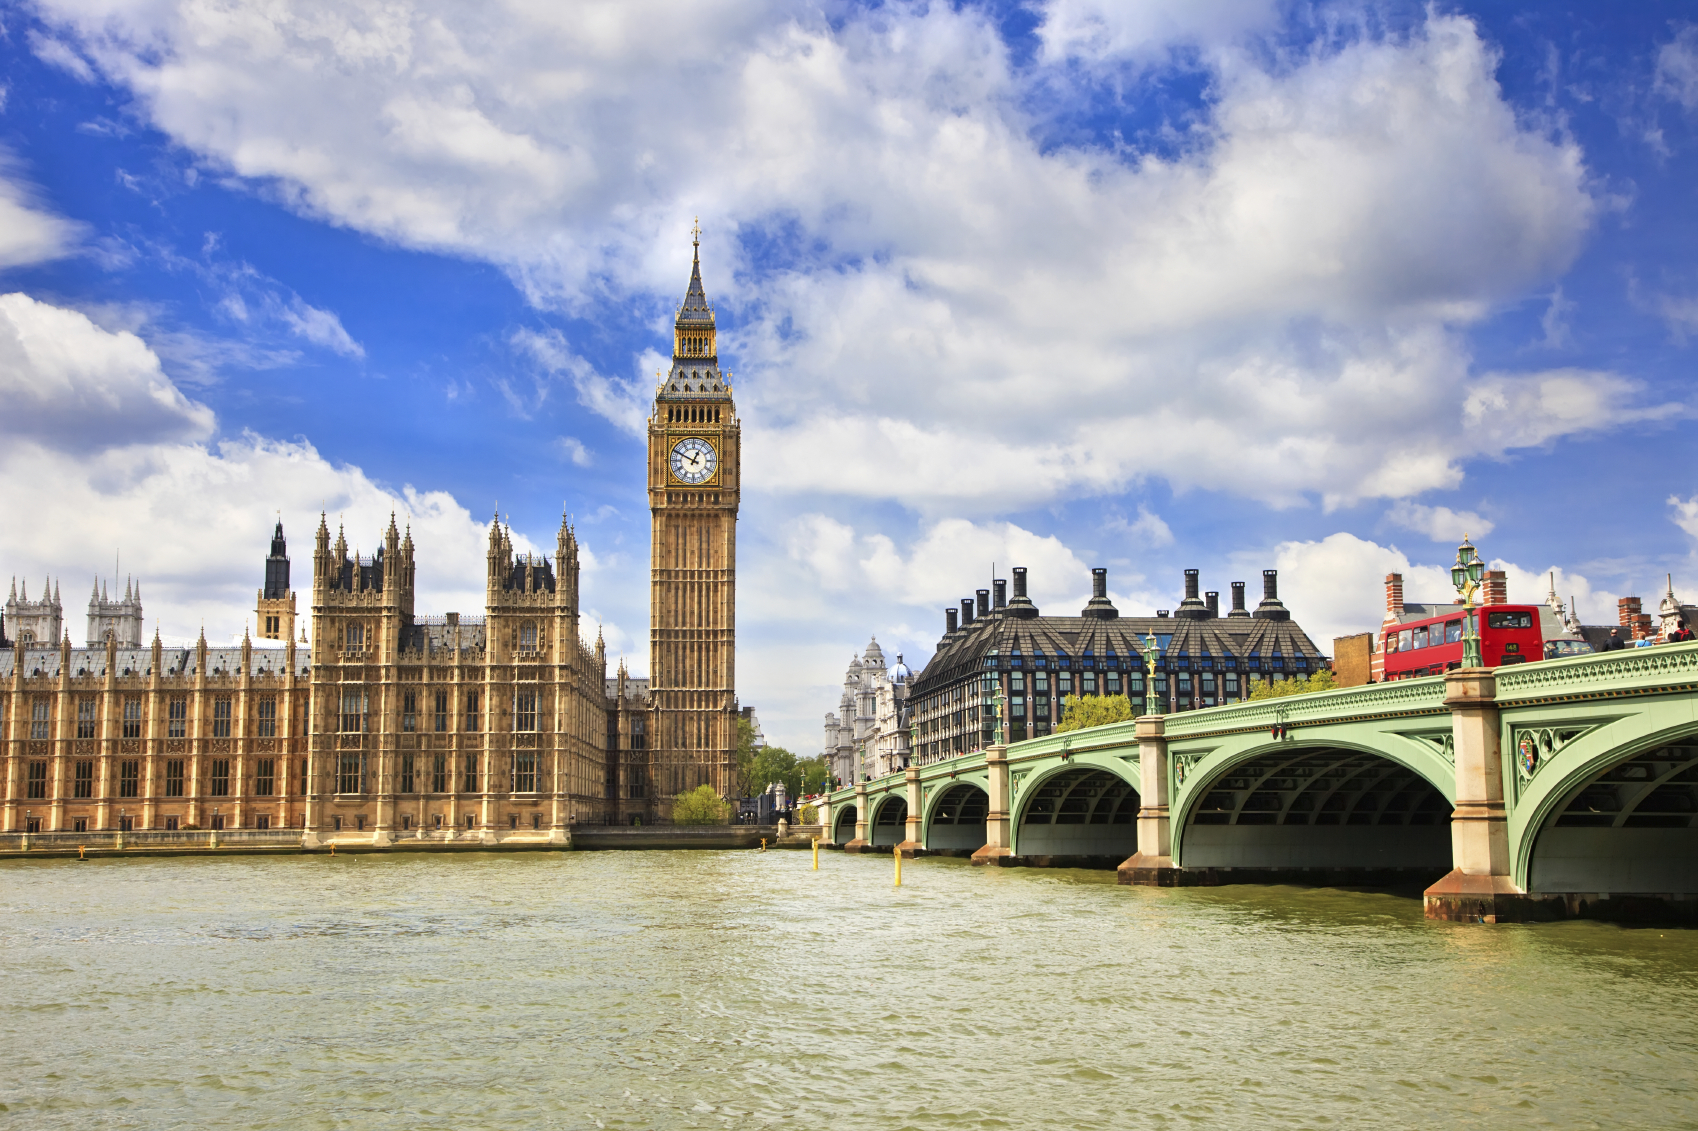 London Parliament and Big Ben with bridge